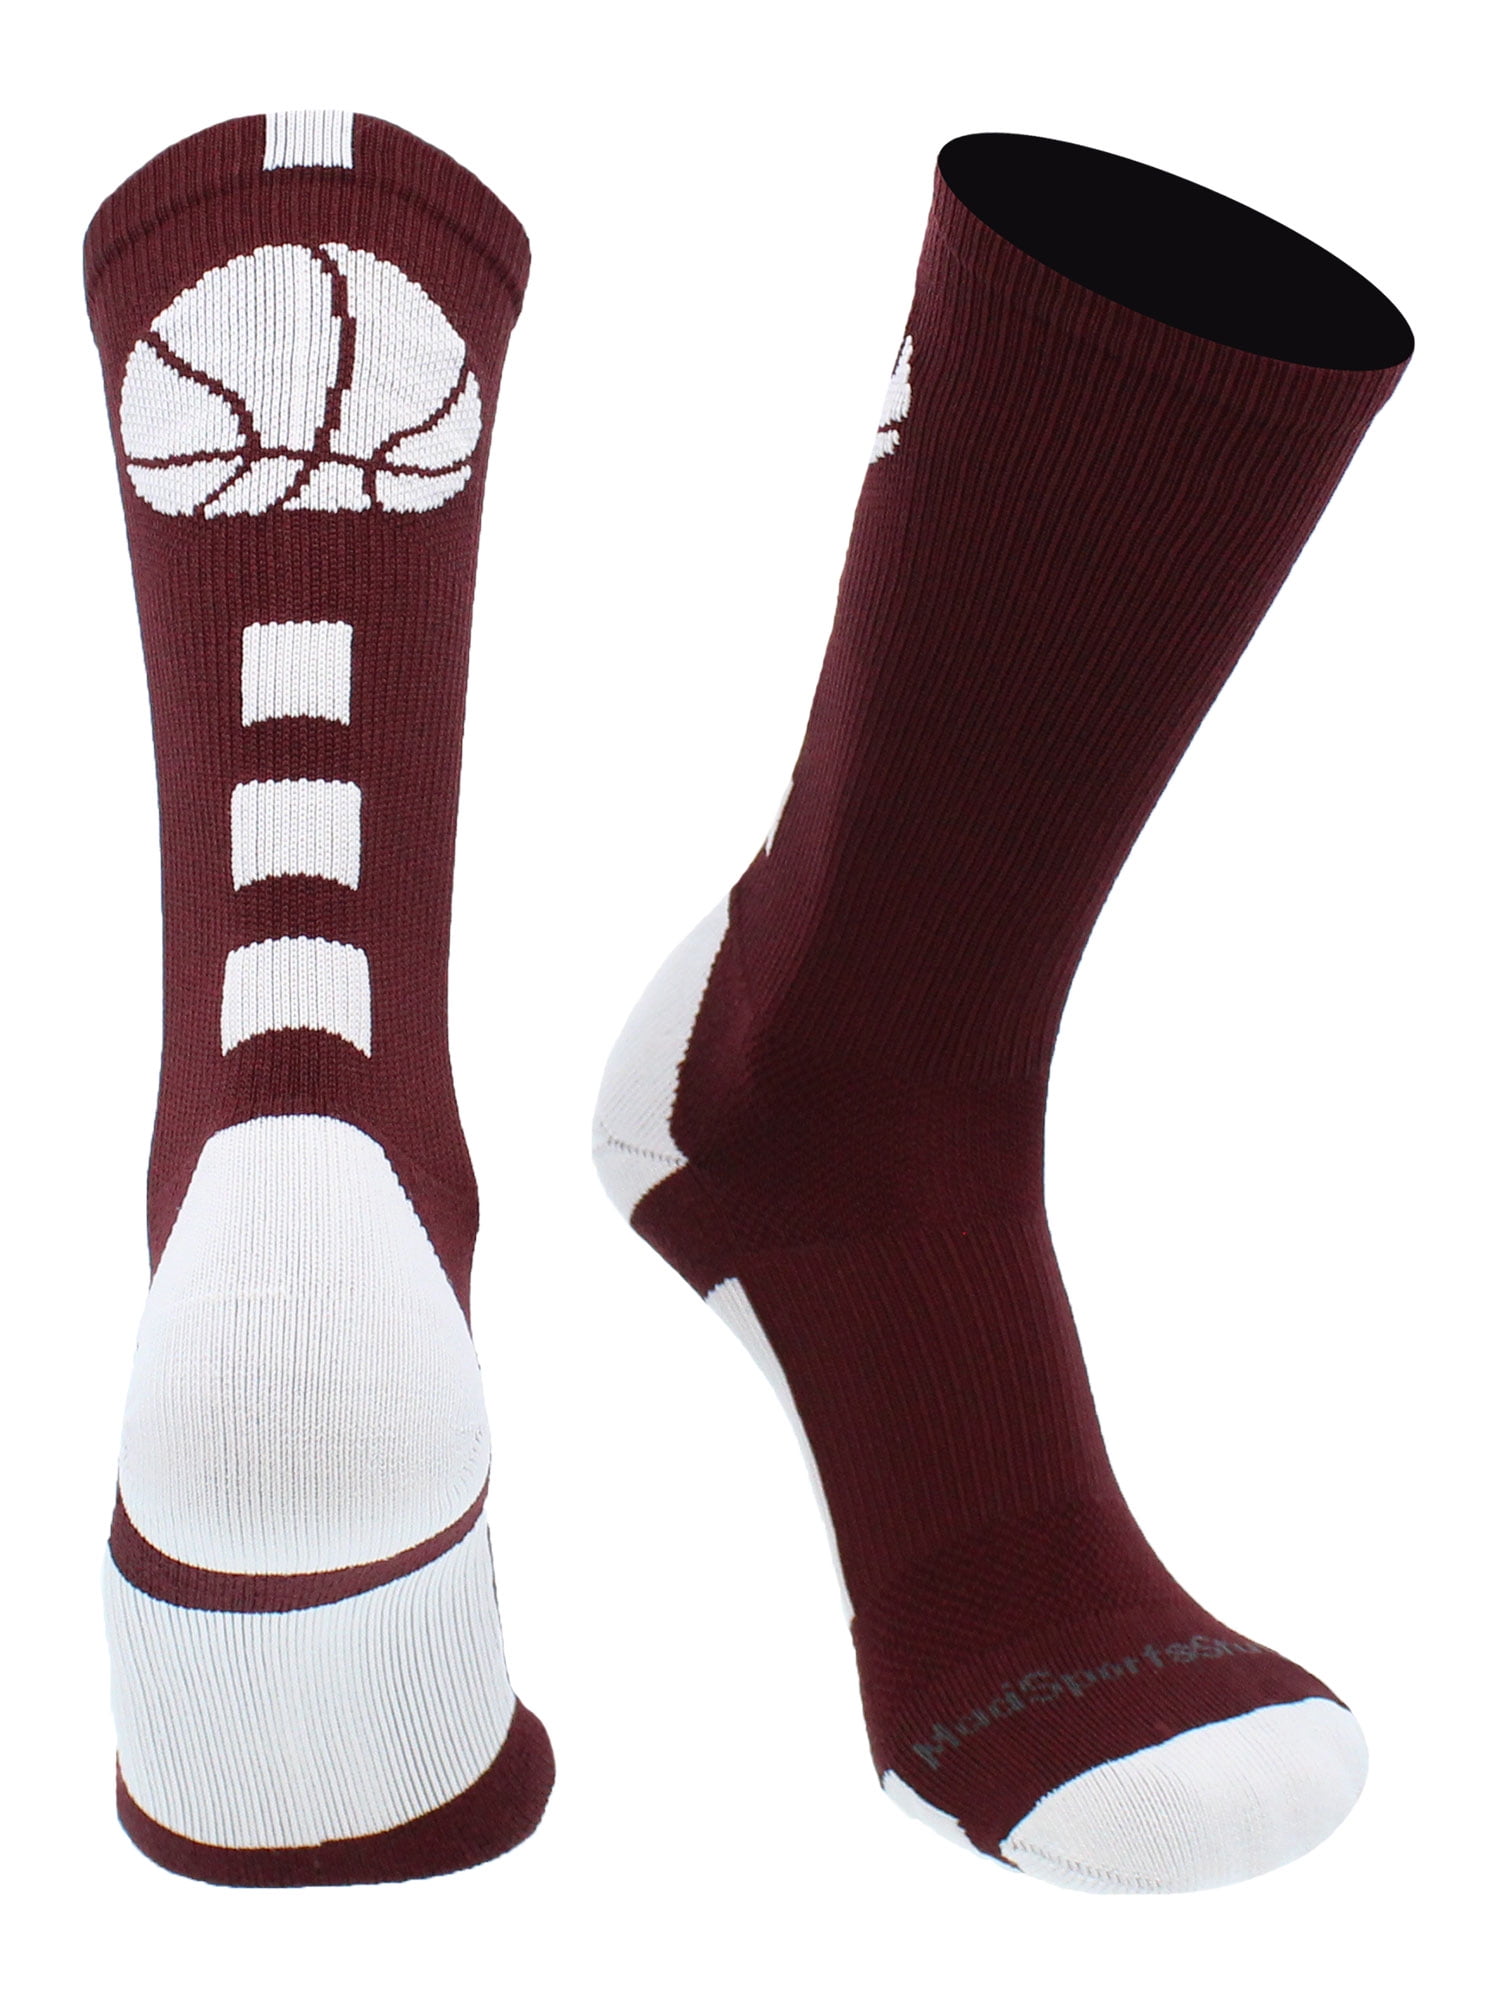 TCK® All-Sports Adult Athletic Socks 6 PAIR Men's Size 10-12.5 Crimson/Maroon 